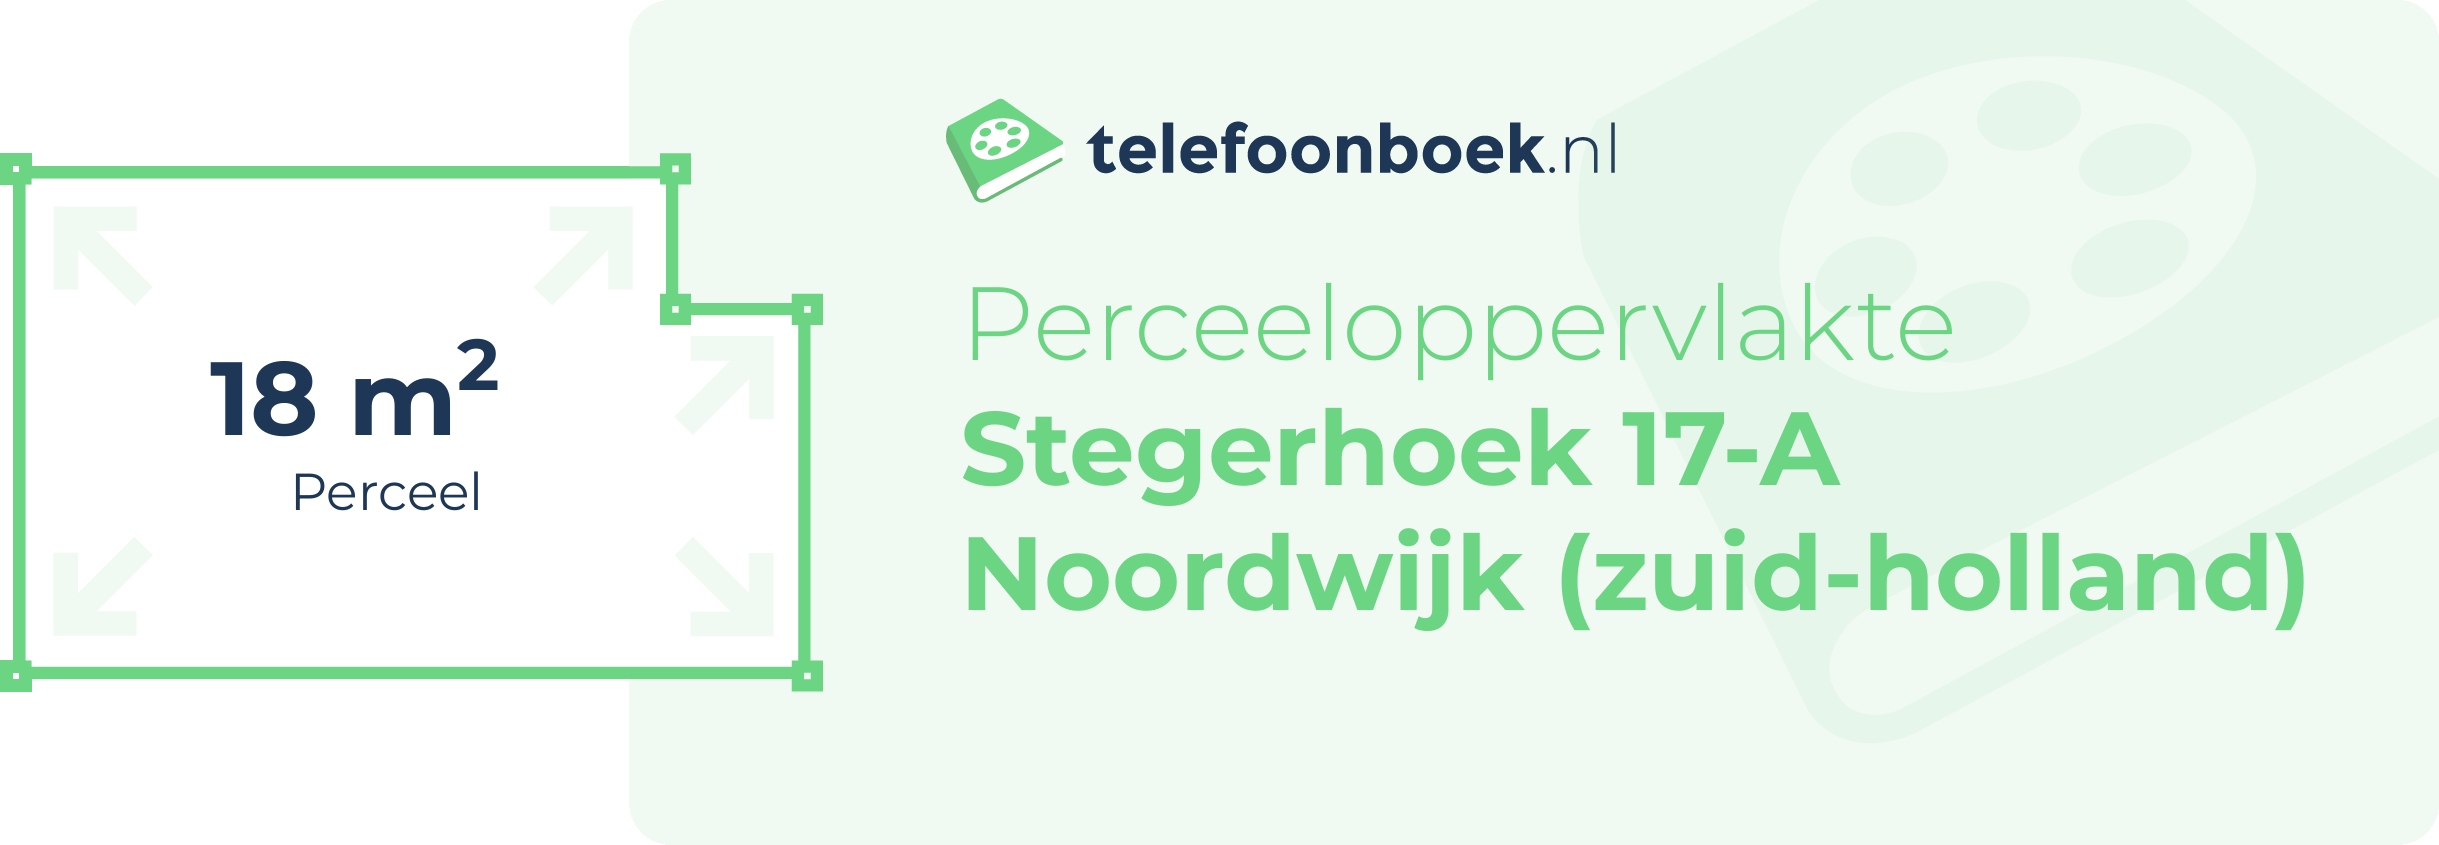 Perceeloppervlakte Stegerhoek 17-A Noordwijk (Zuid-Holland)